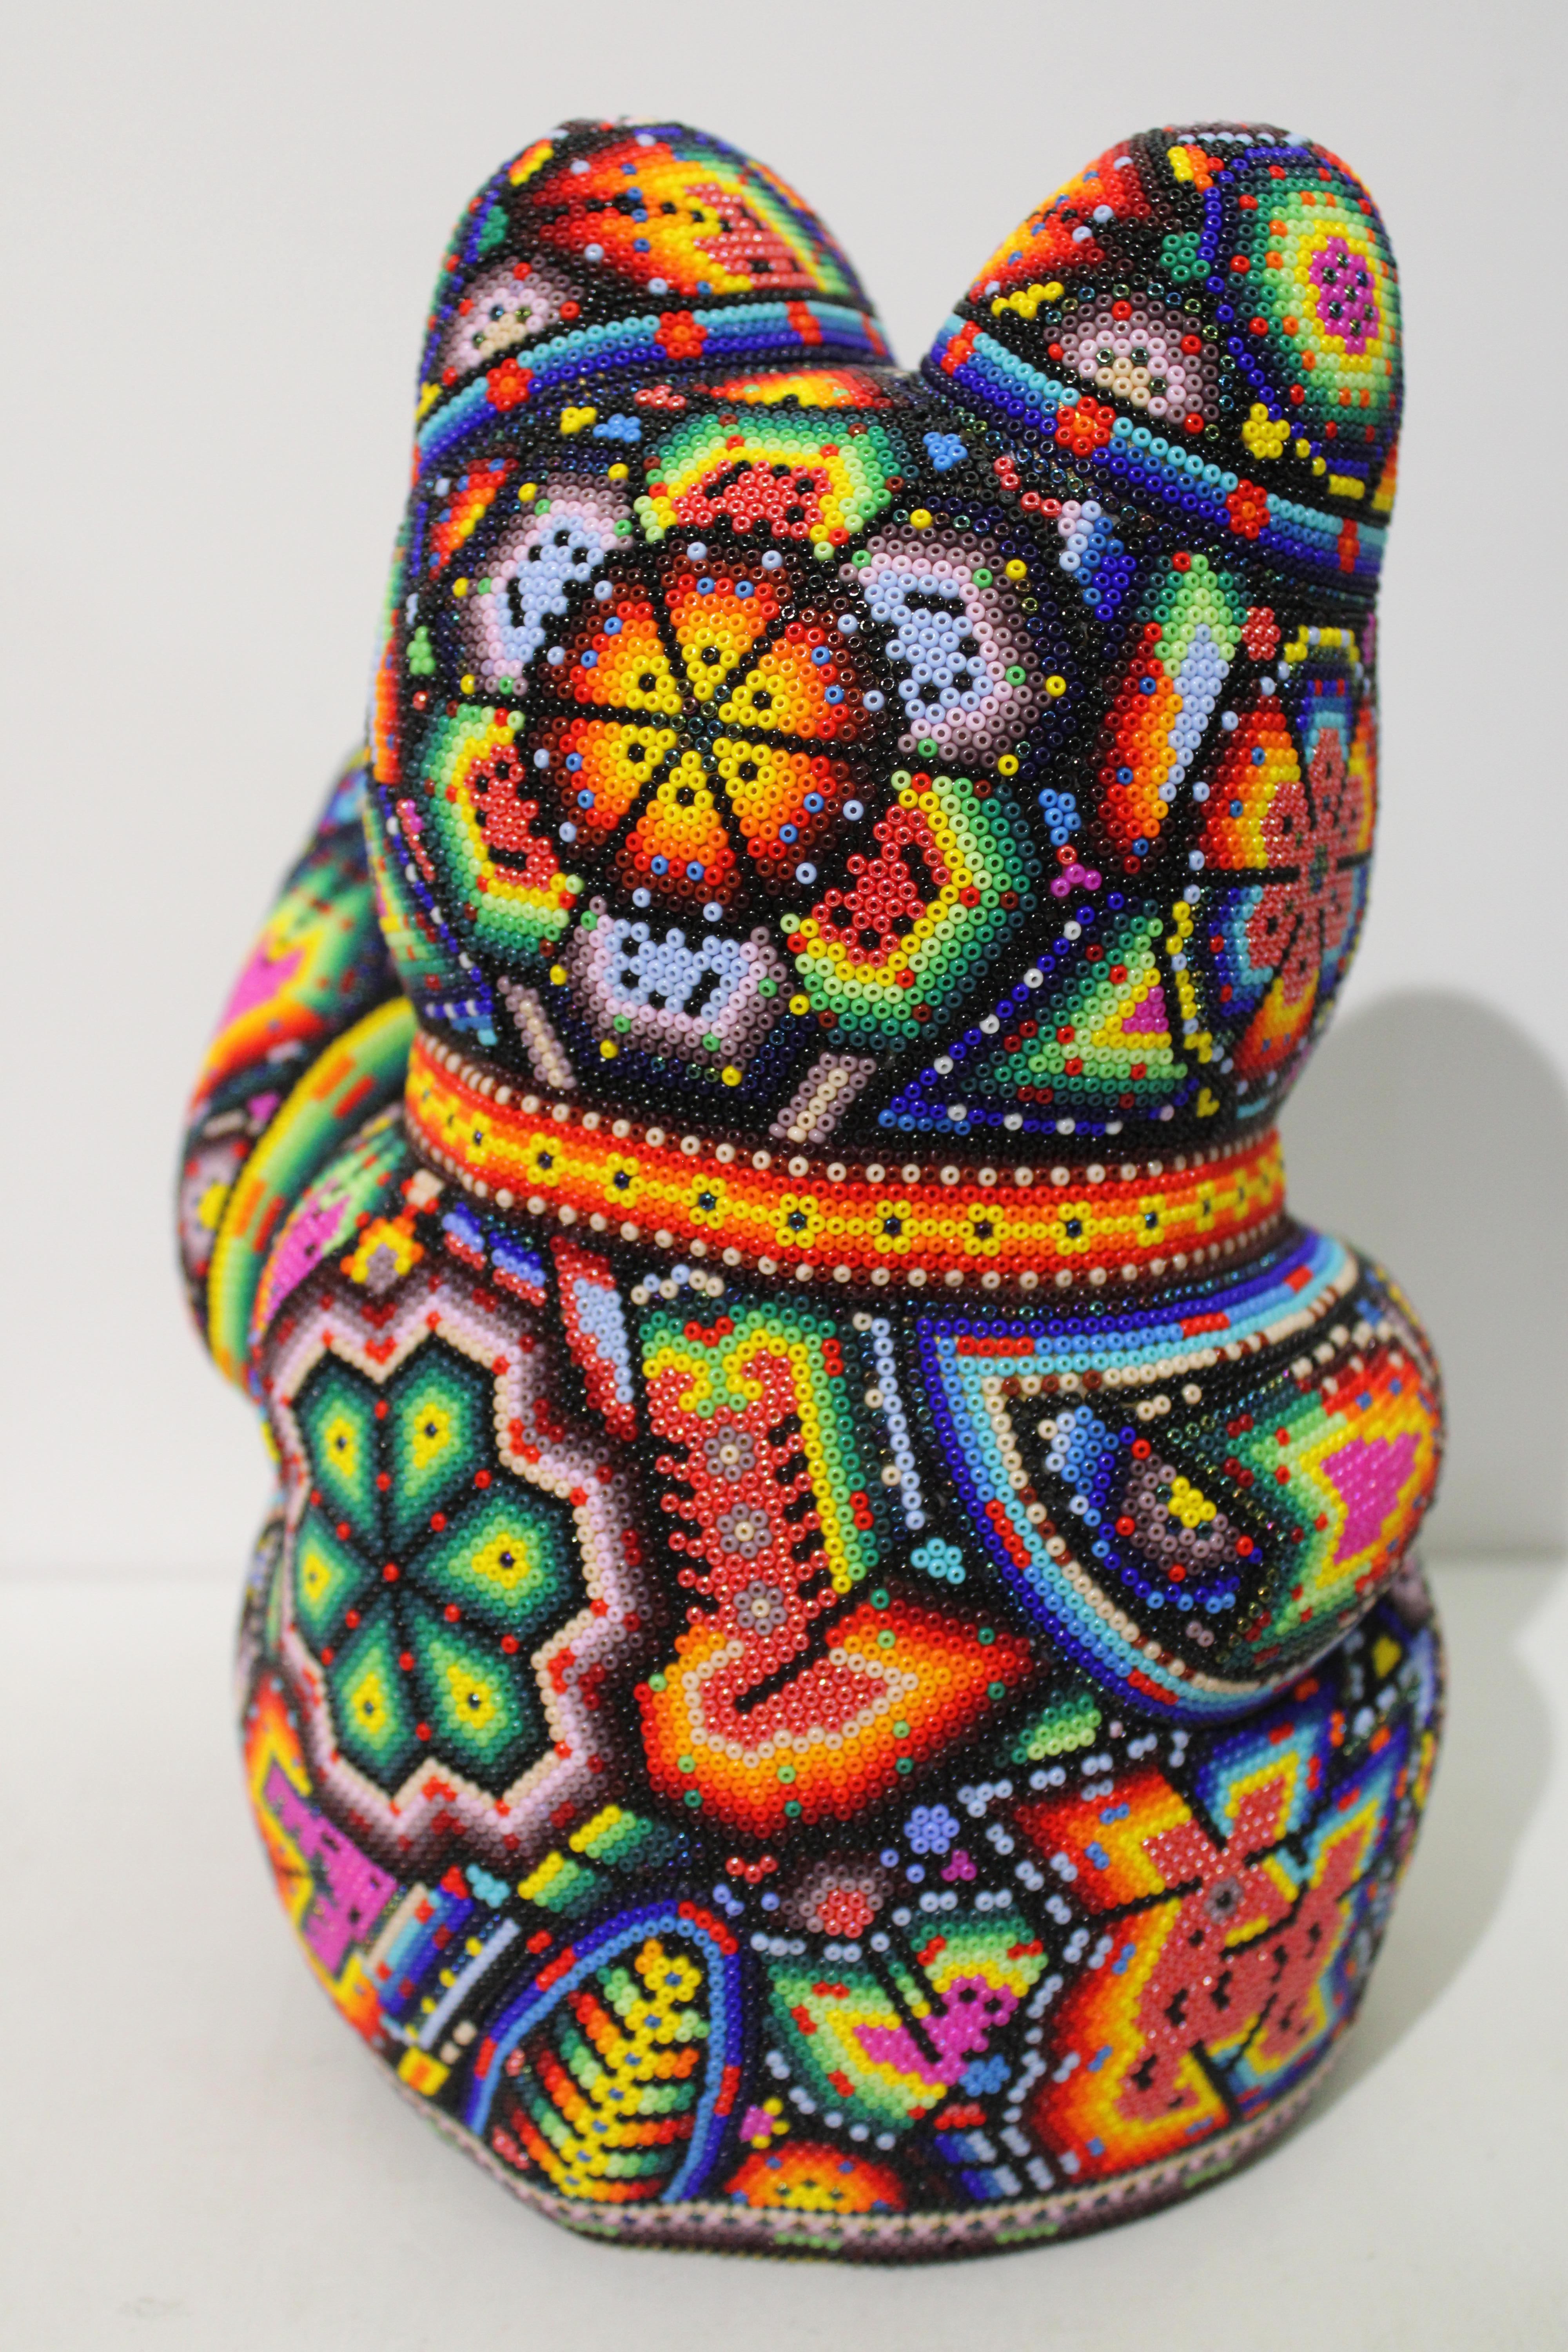 Money Cat from Huichol ALTERATIONS Series - Pop Art Sculpture by CHROMA aka Rick Wolfryd 